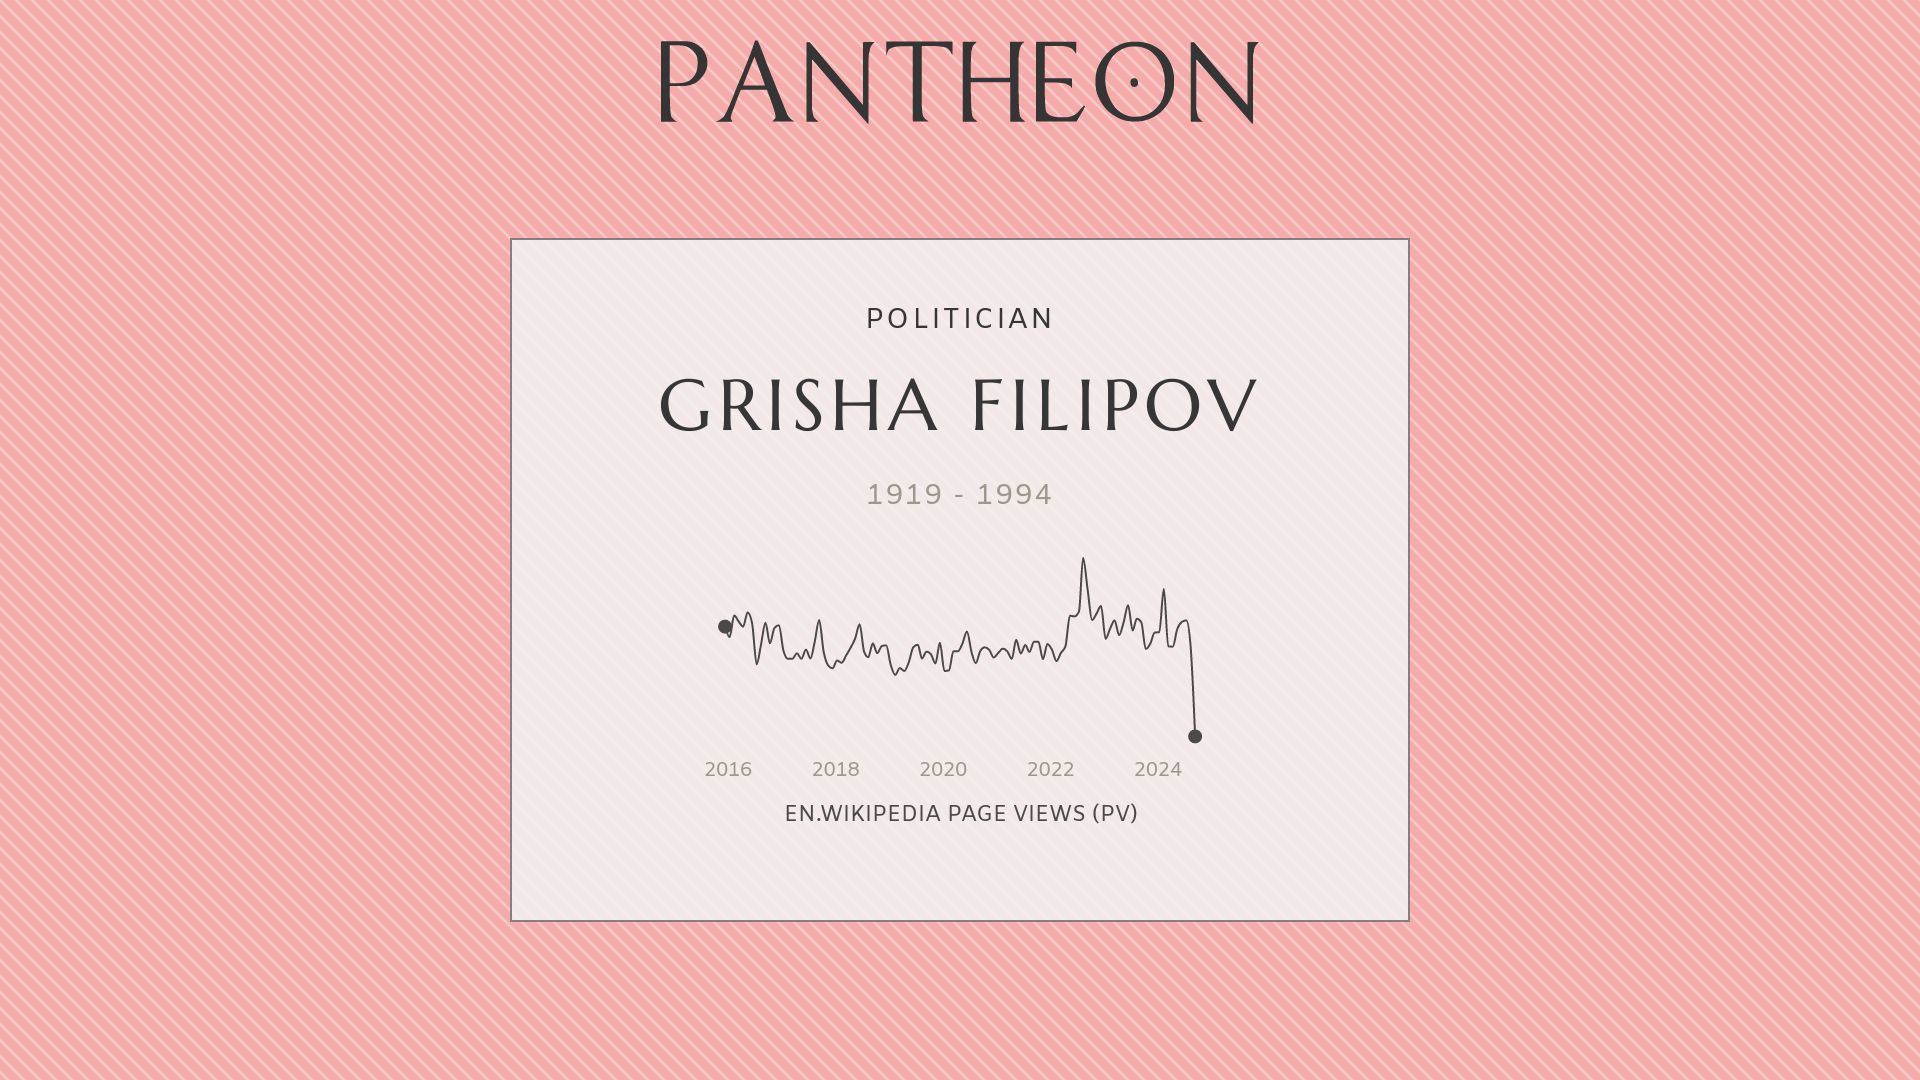 Grisha Filipov Biography